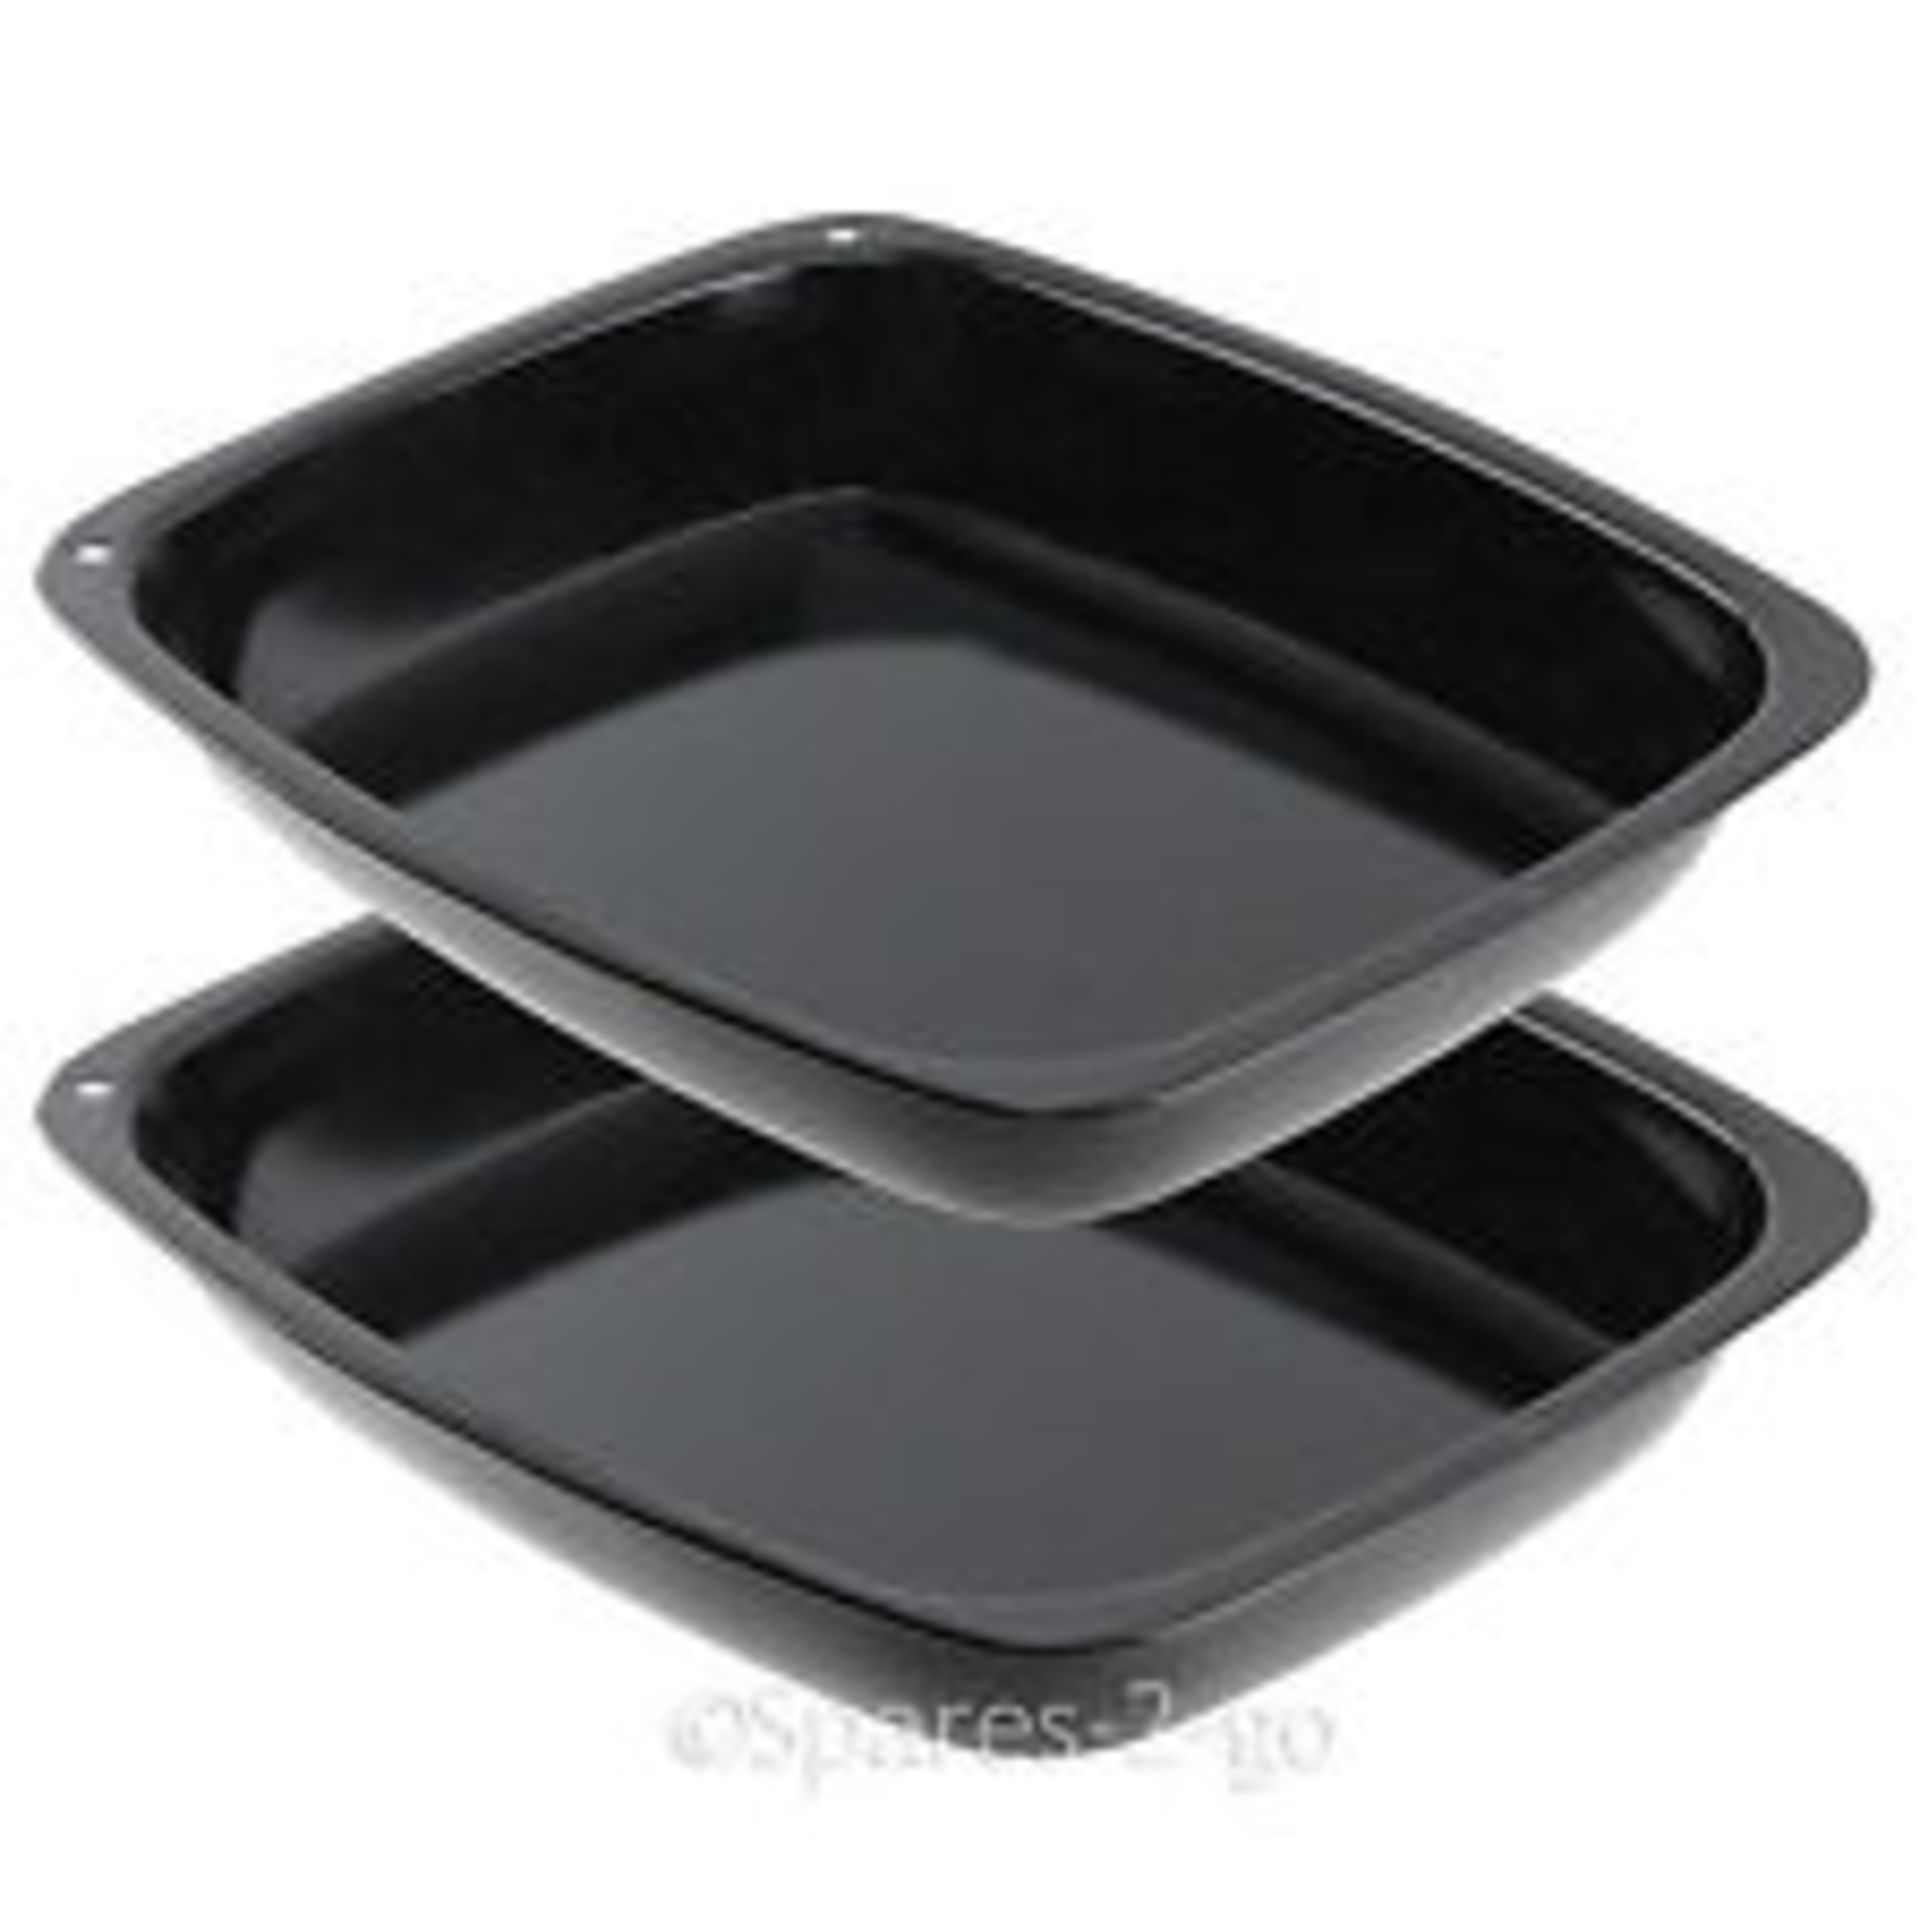 V *TRADE QTY* Brand New Two Piece Enamel Range Scratch Resistant Dishwasher Safe Roasting Pan Set